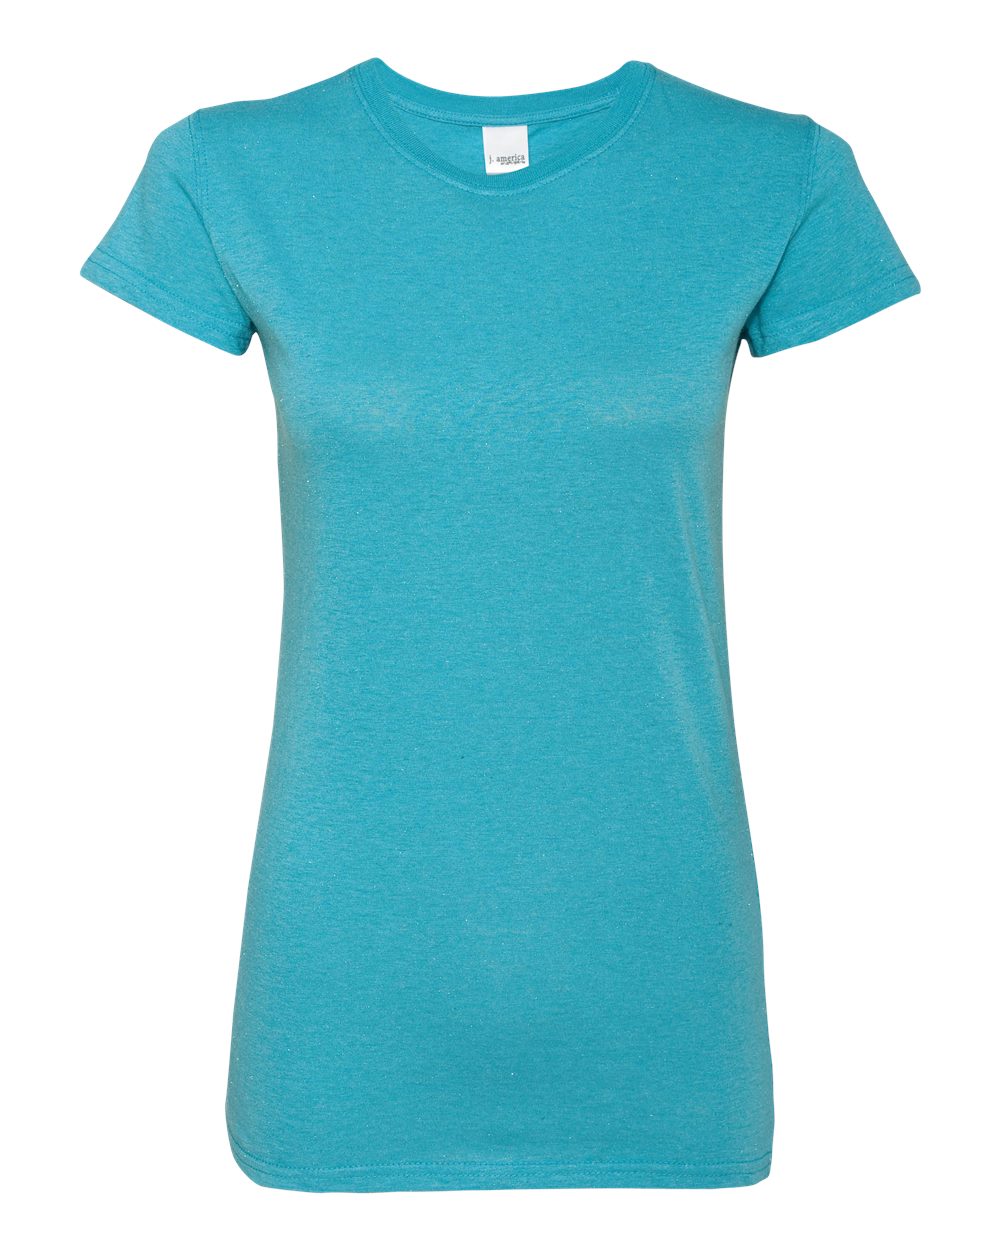 J. America Ladies' Glitter T-Shirt - 8138 $10.25